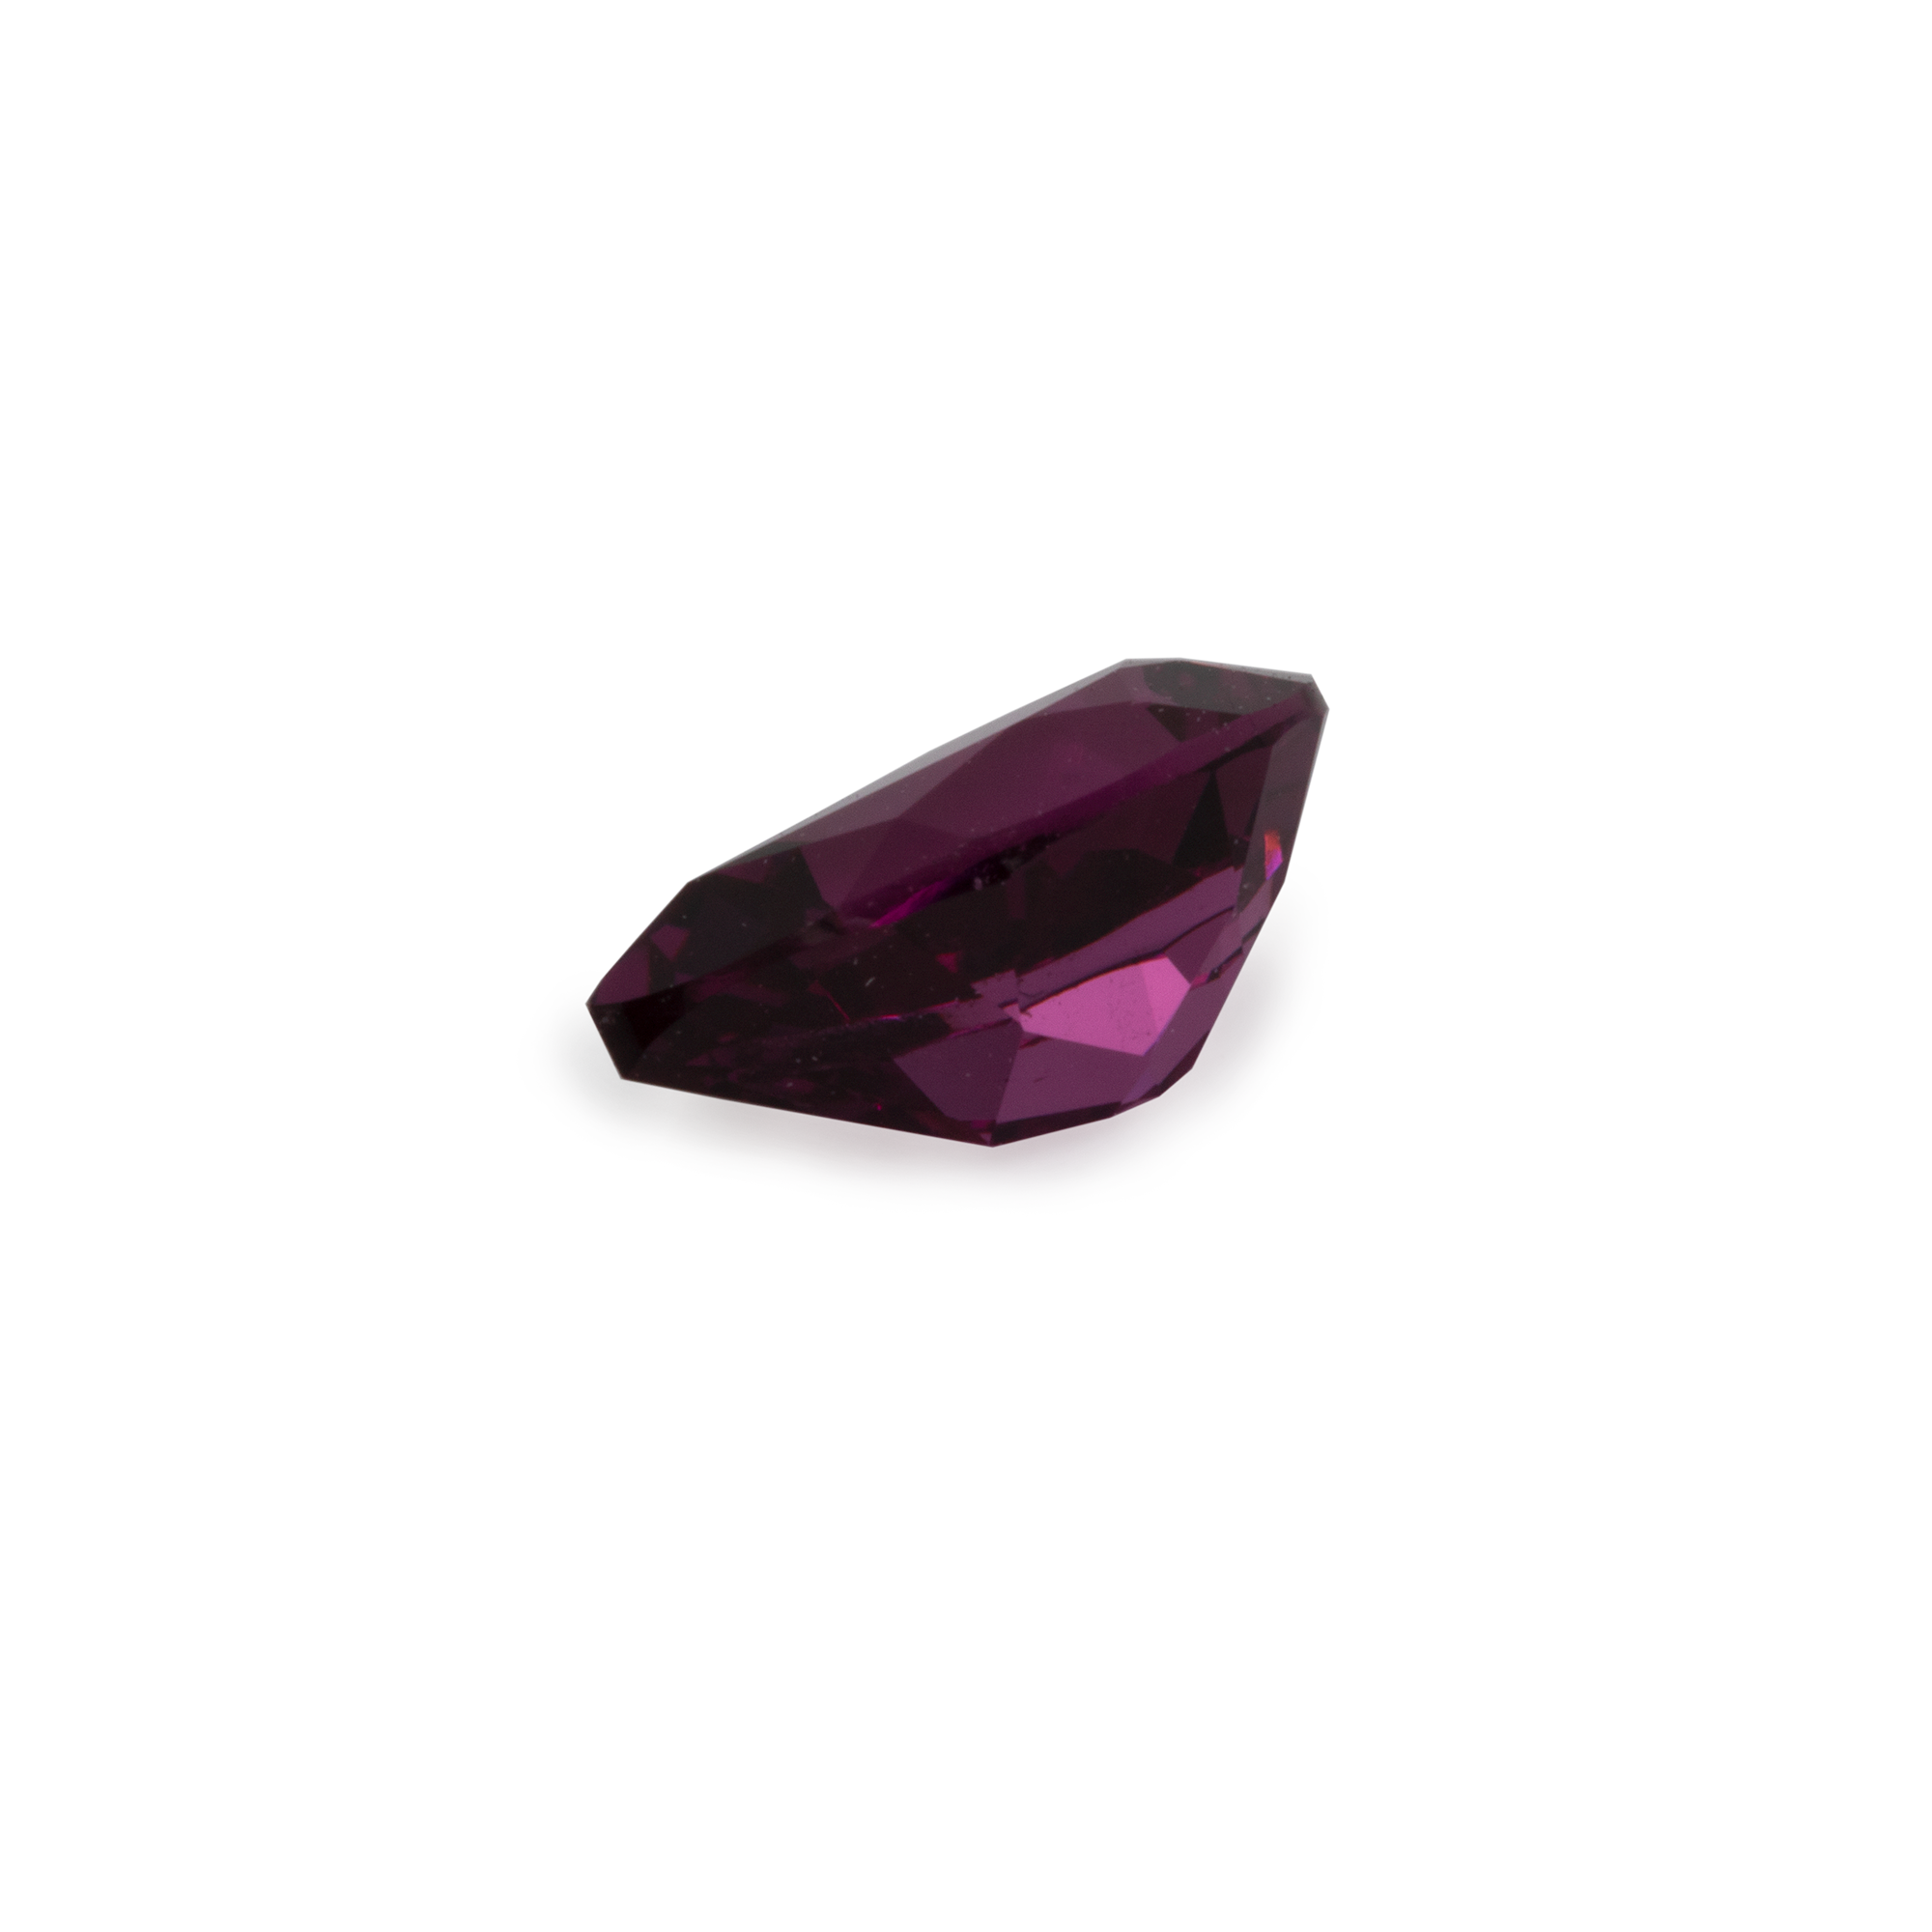 Royal Purple Garnet - purple, pearshape, 6x4 mm, 0.46-0.54 cts, No. RP19001